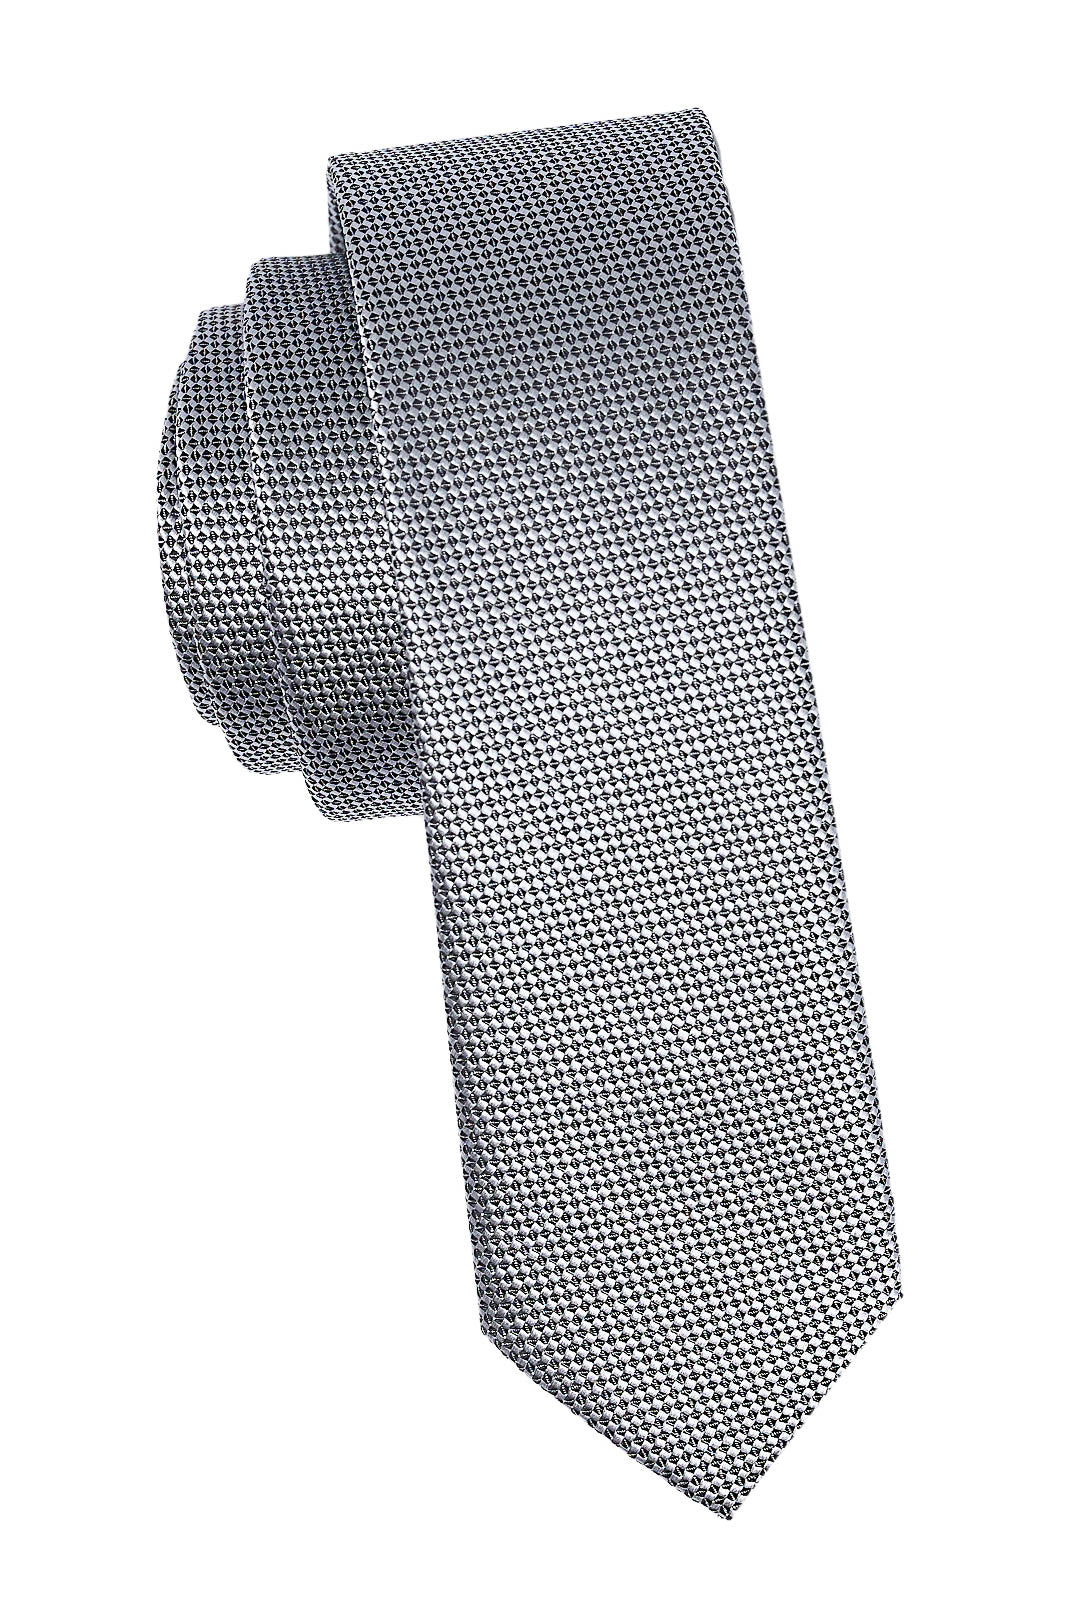 Silver Square Textured Tie